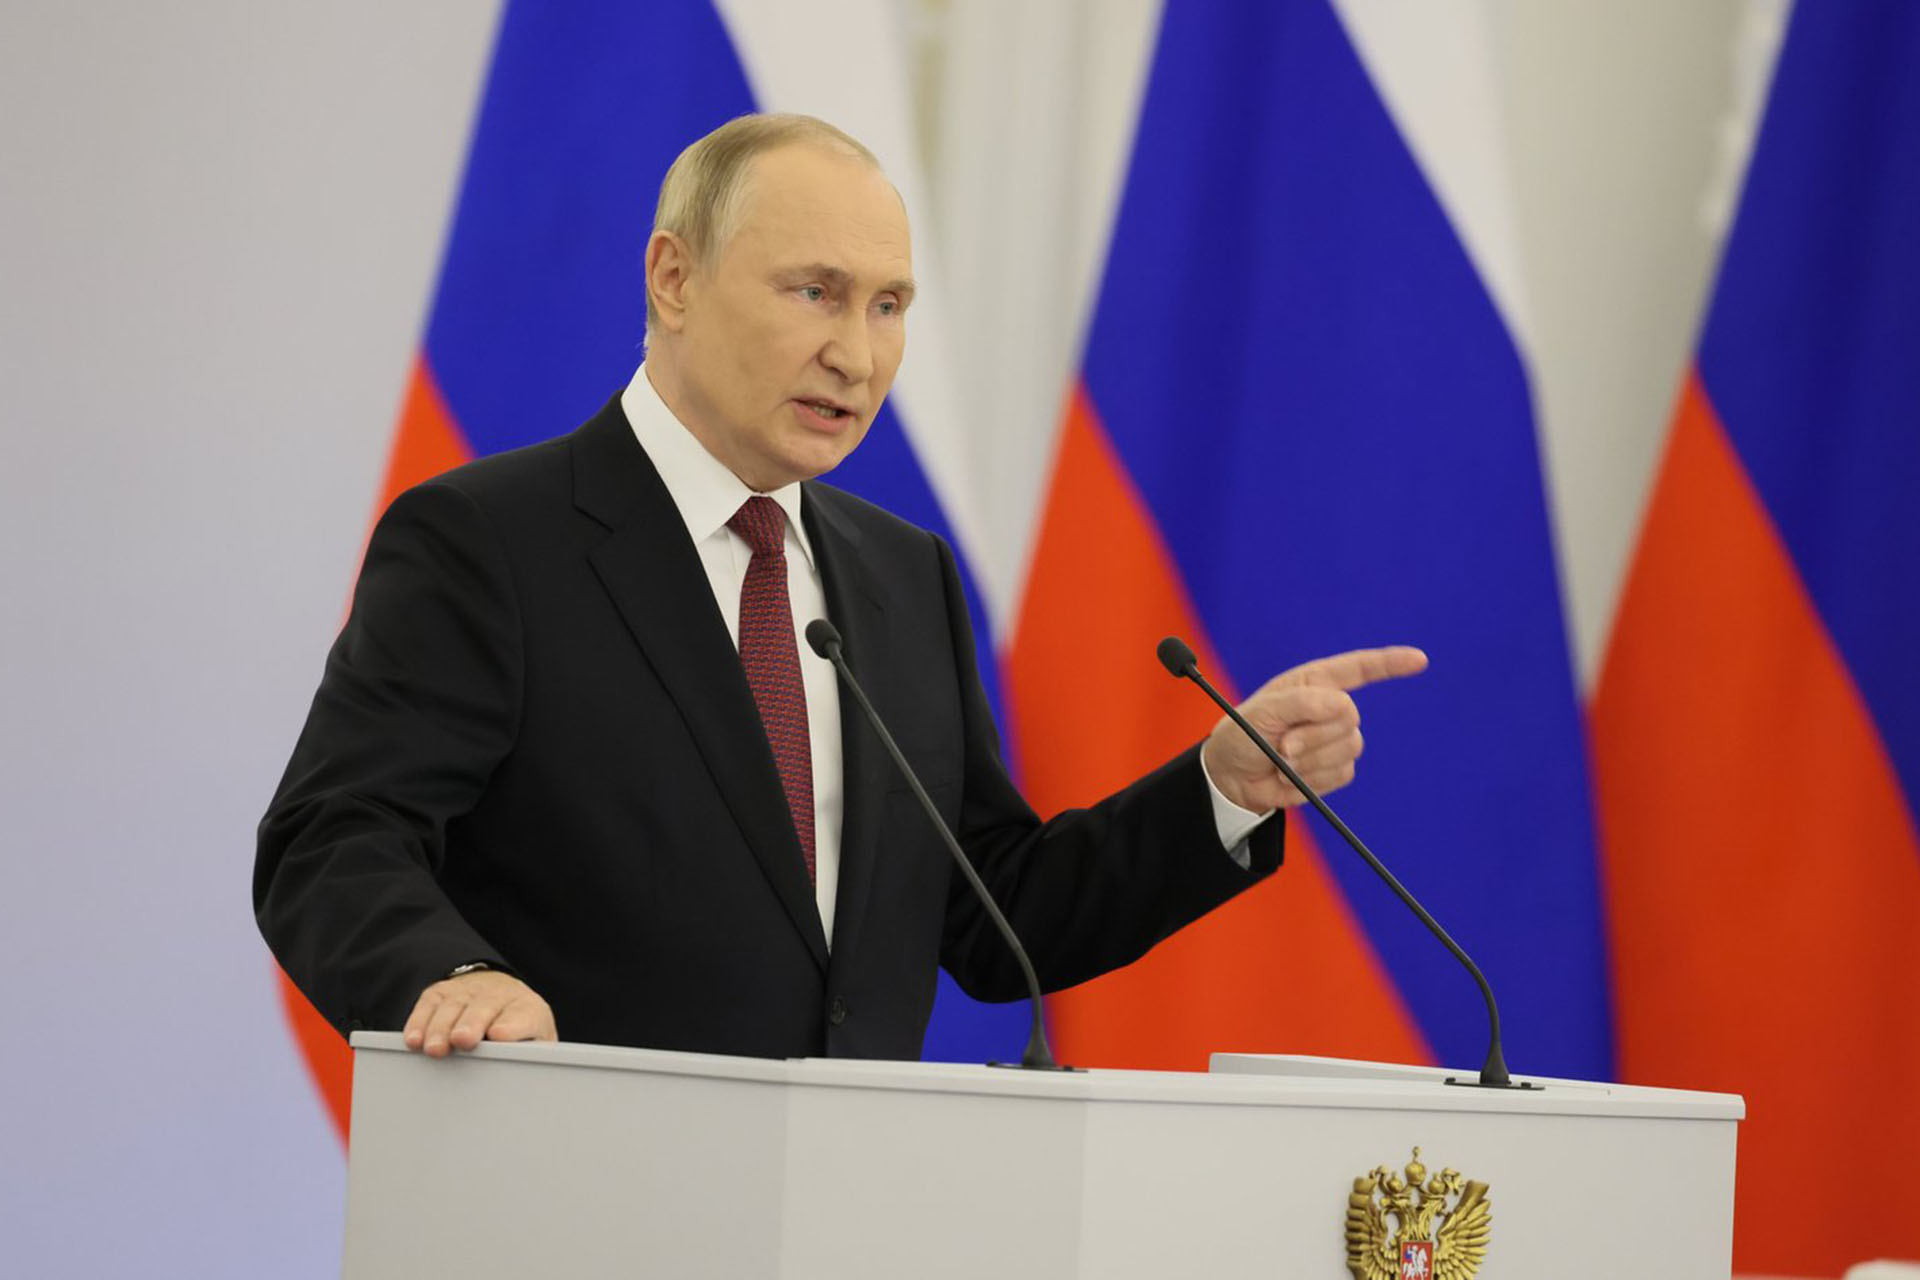 Bild: Council.gov.ru, Vladimir Putin 2022 Annexation Speech, CC BY 4.0, via Wikimedia Commons (Bildgröße geändert)